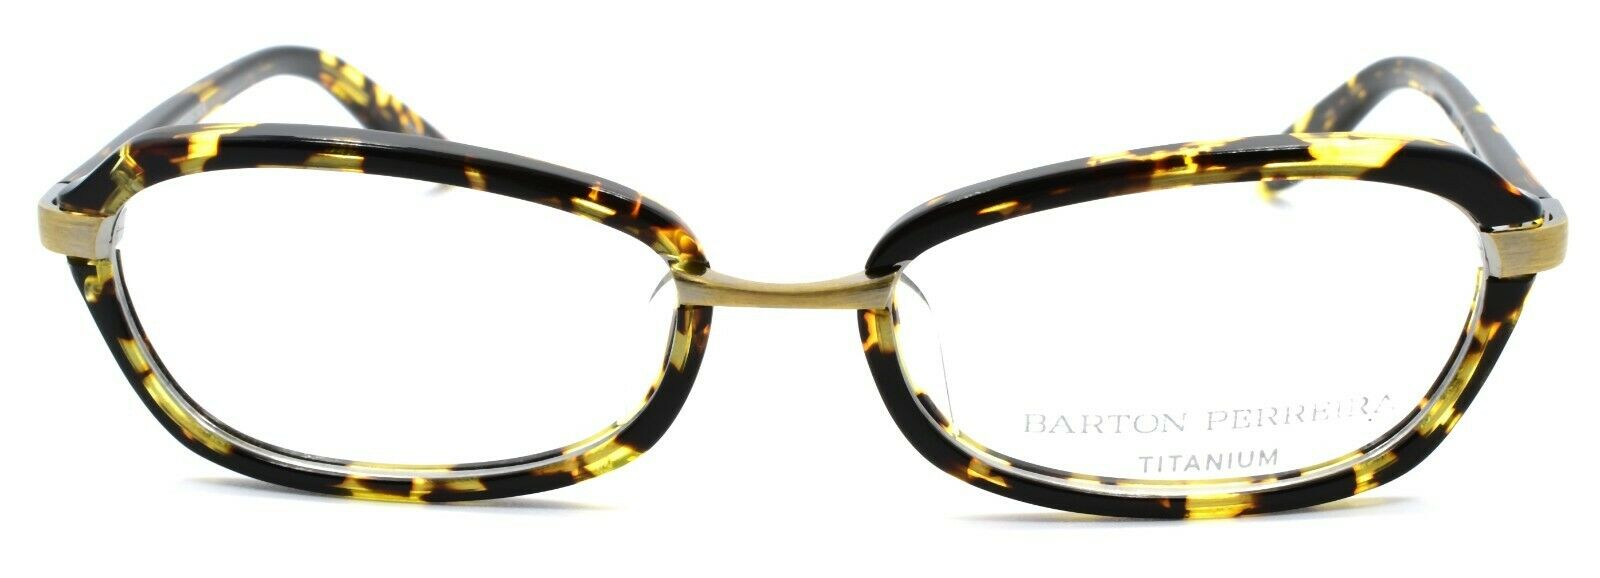 2-Barton Perreira Rosalie Women's Eyeglasses Frames PETITE 50-16-127 Heroine Chic-672263039297-IKSpecs